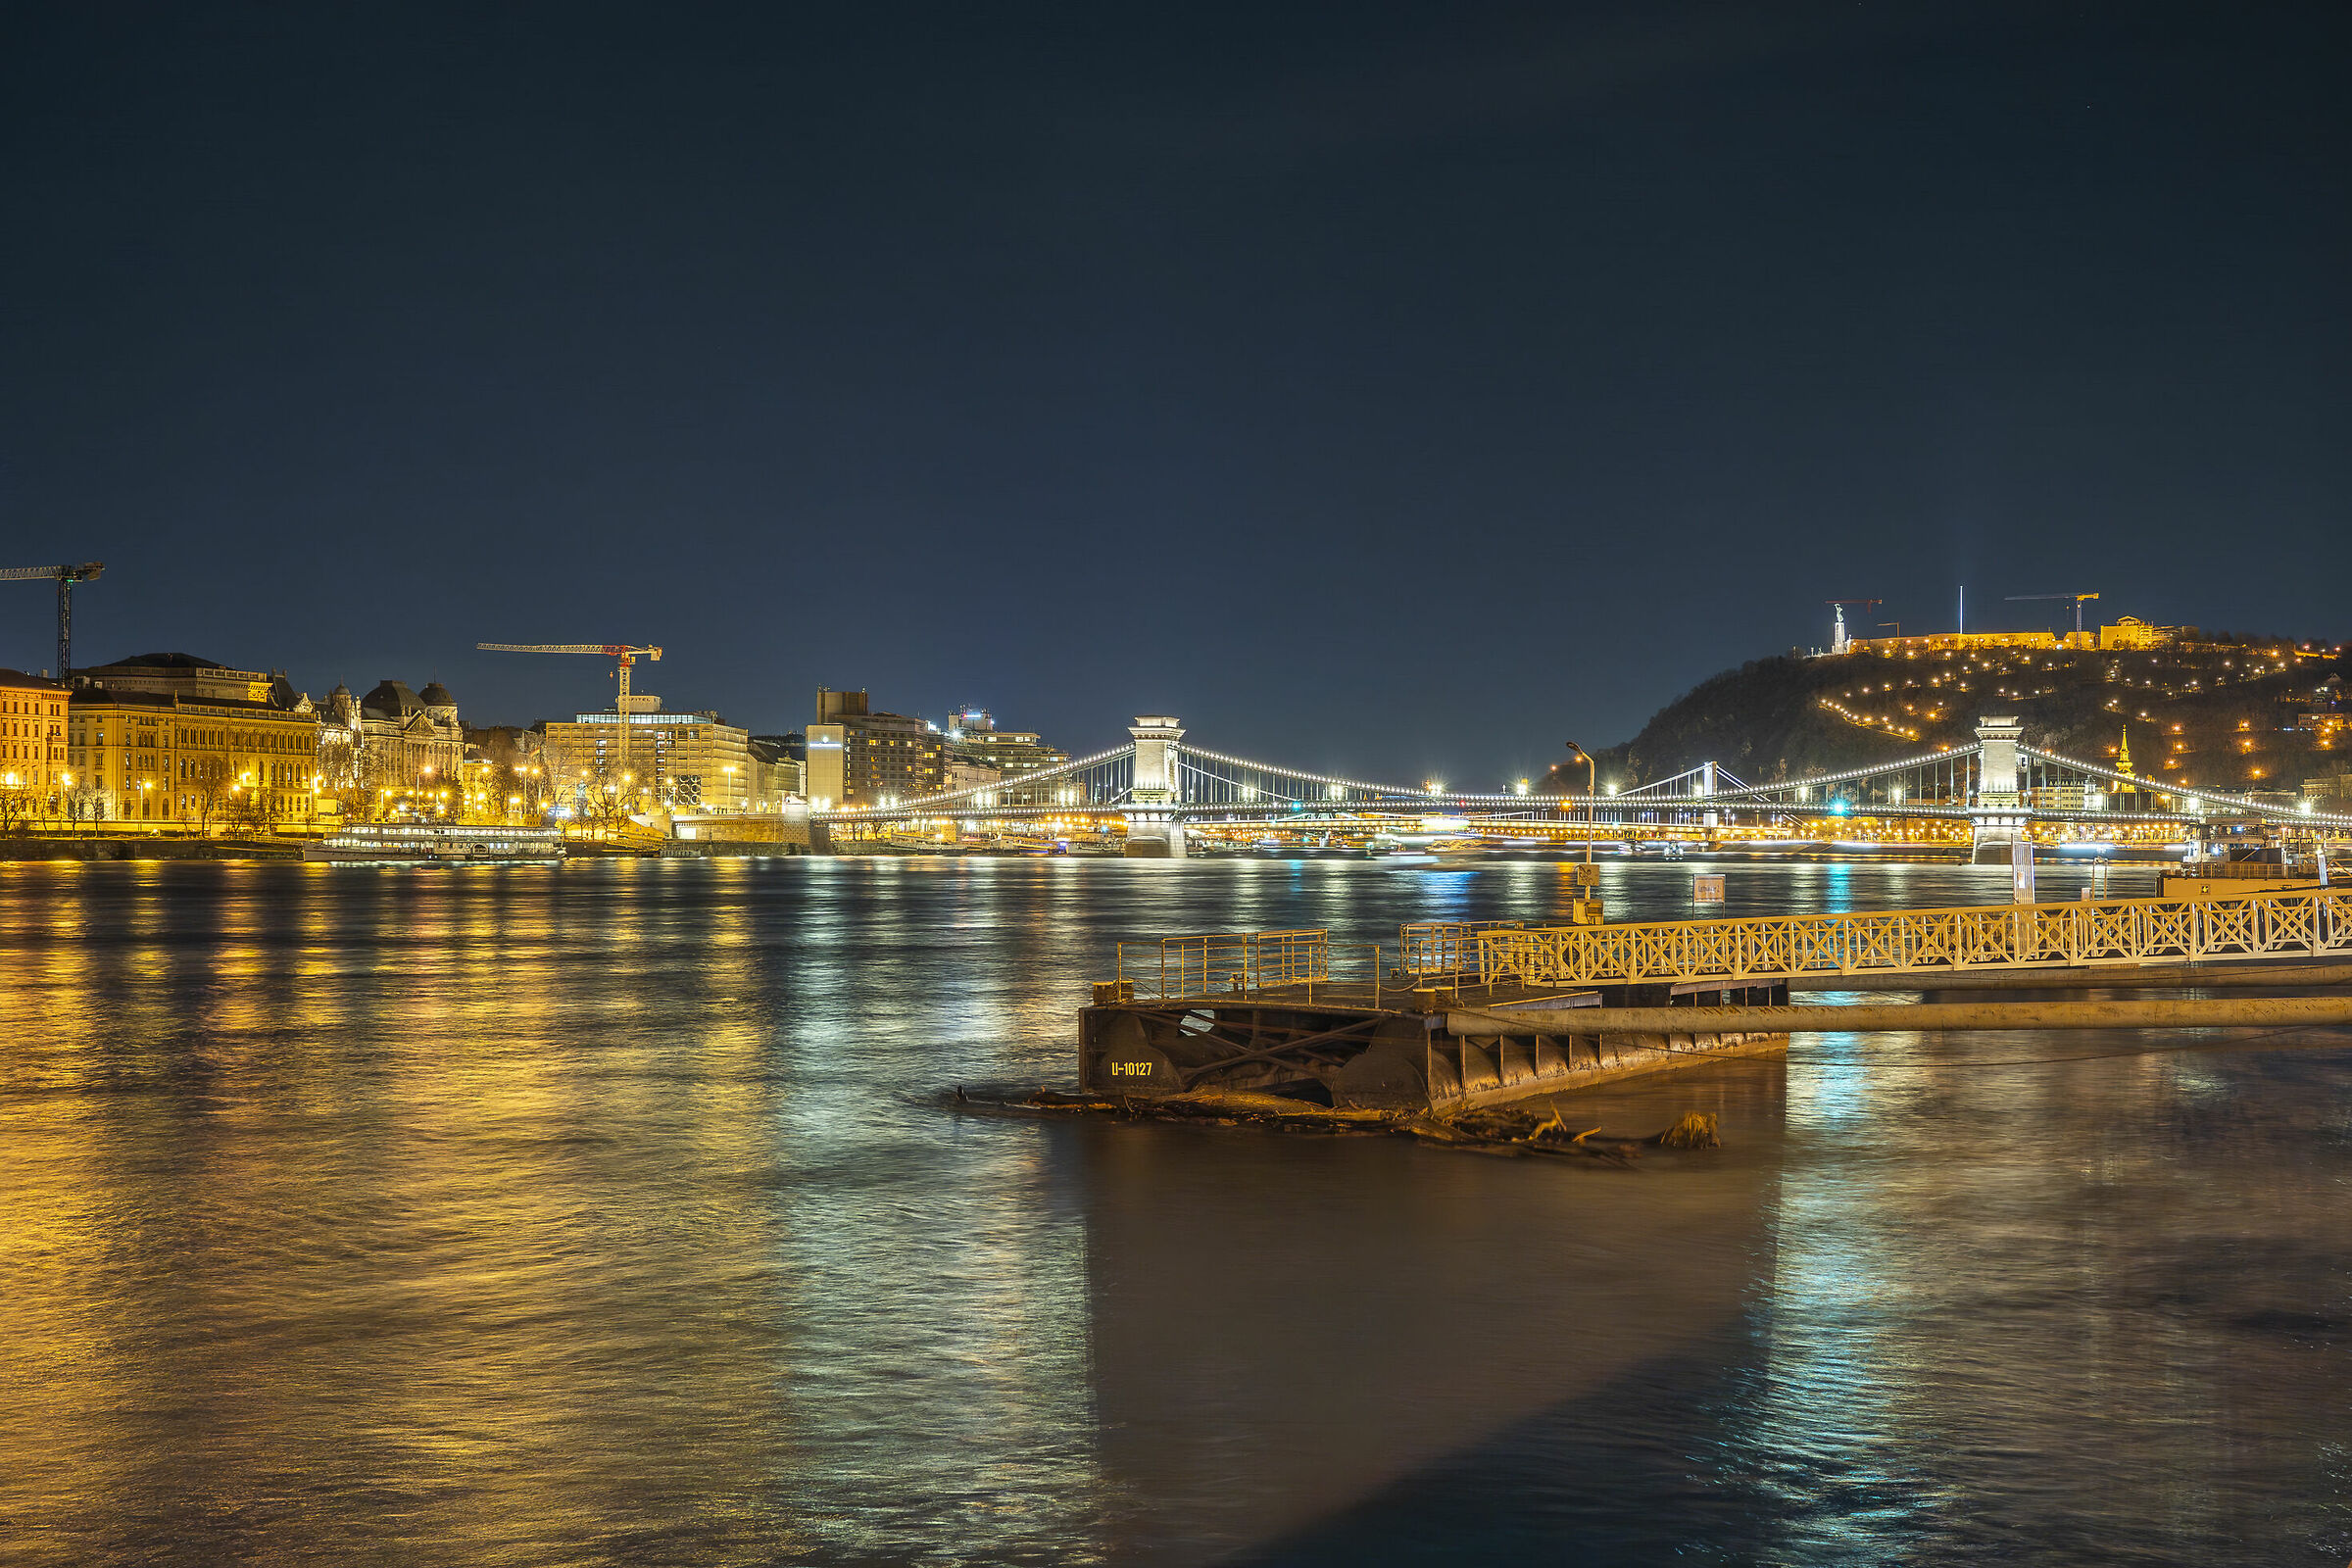 Lights on the Danube...